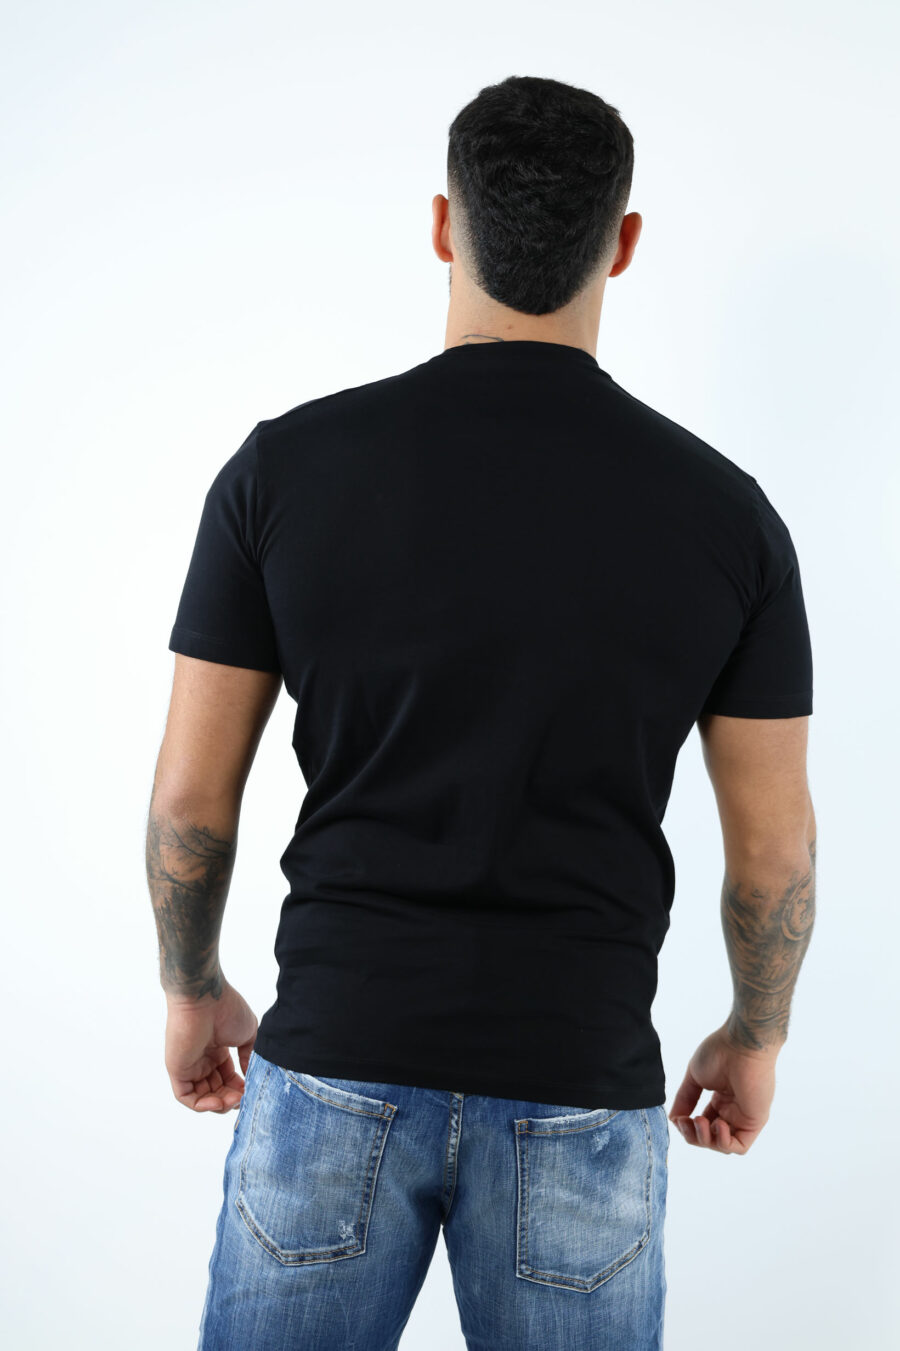 Camiseta negra con maxilogo "suburbans" blanco - 106890